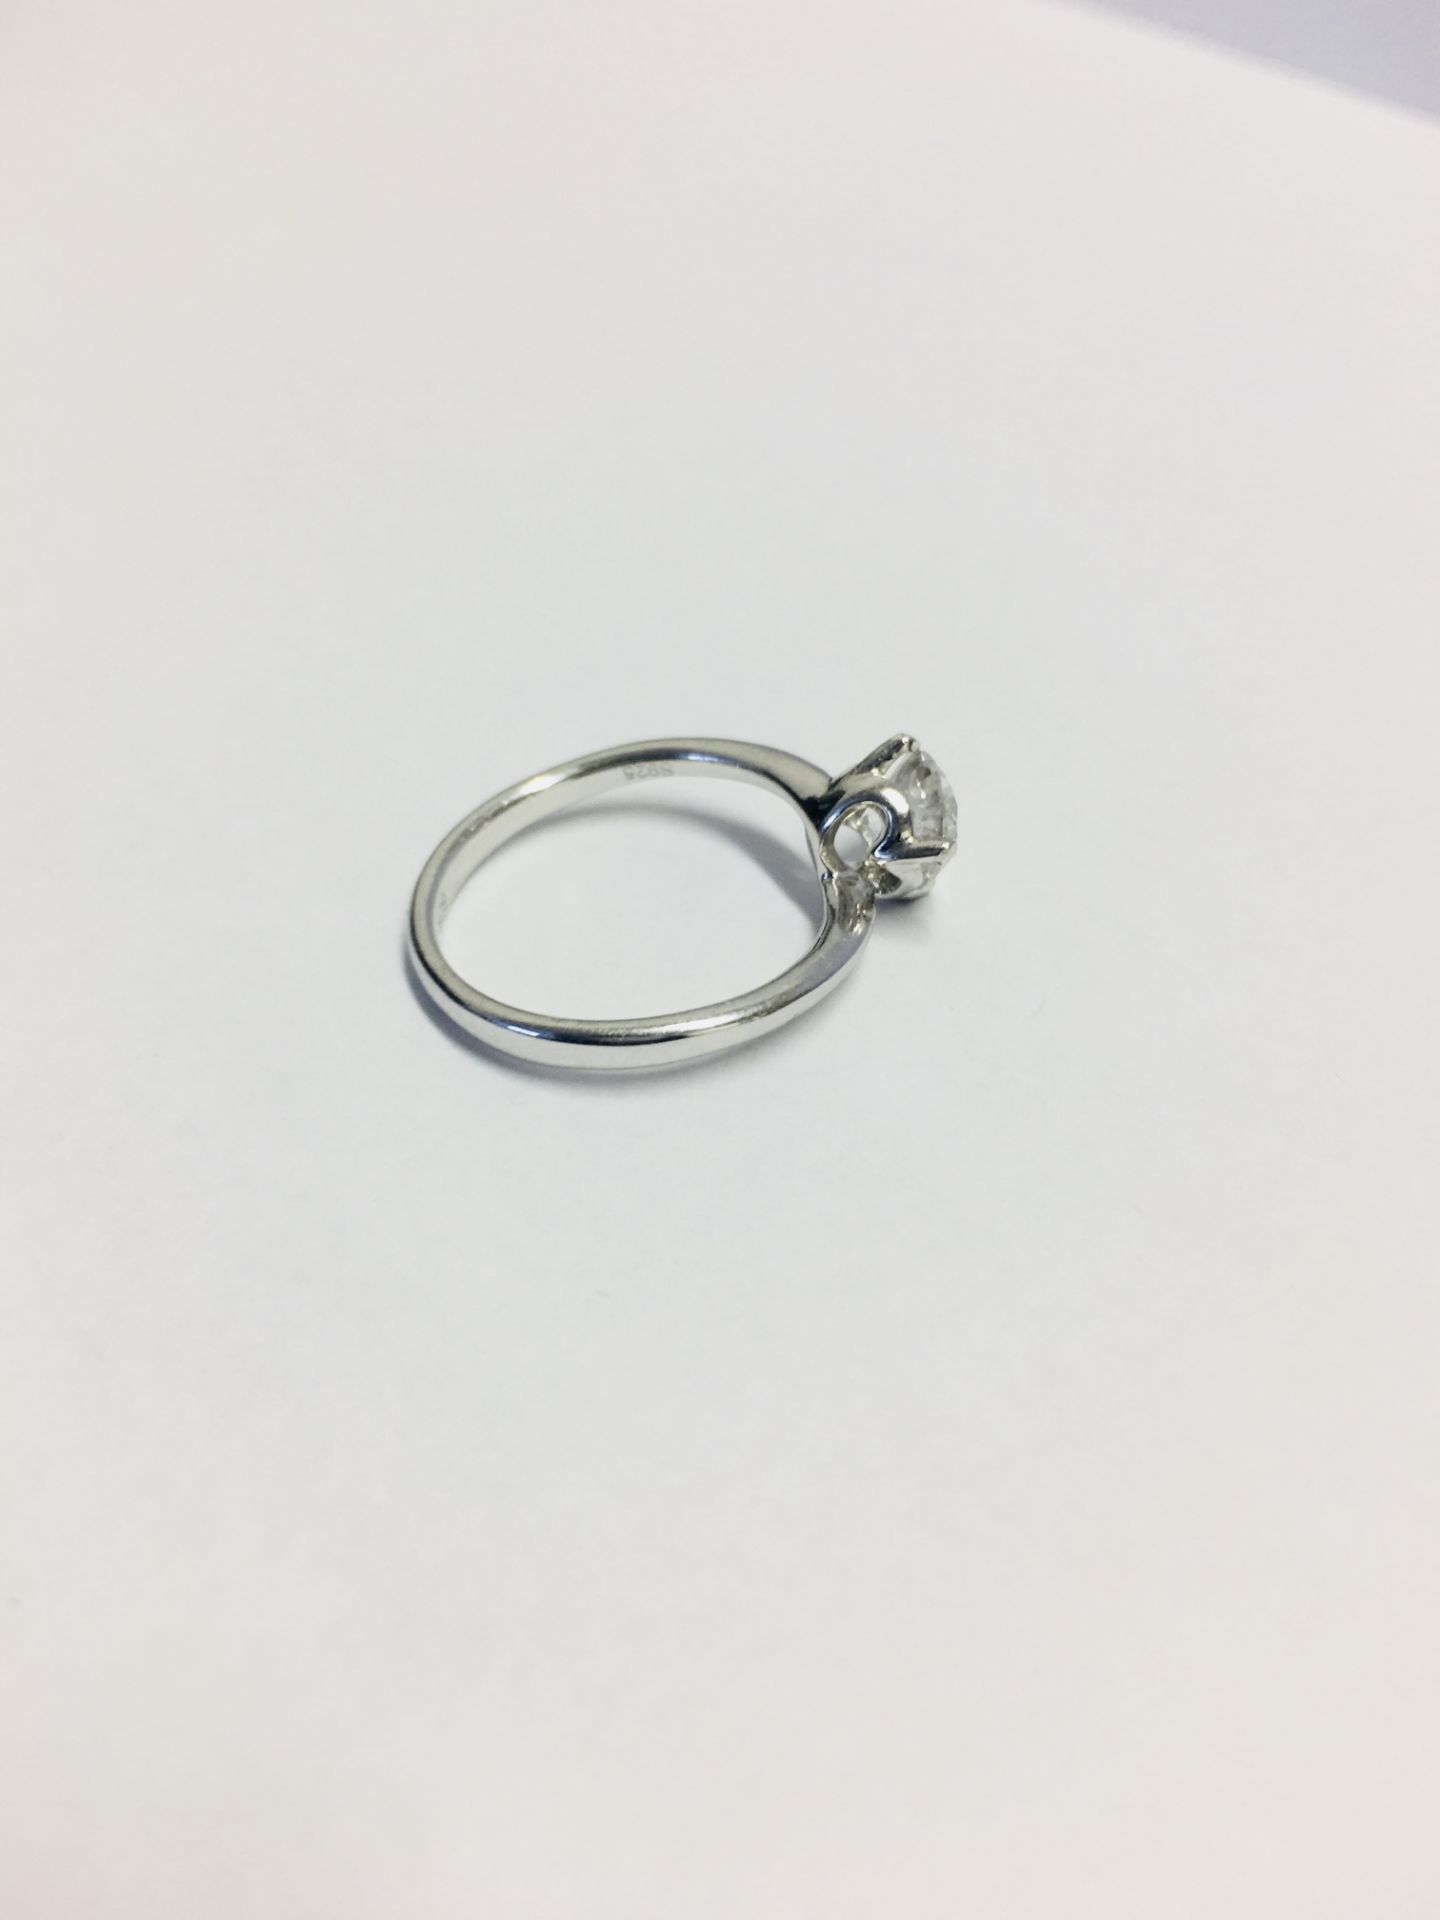 1.01ct brilliant cut diamond solitaire ring - Image 5 of 6